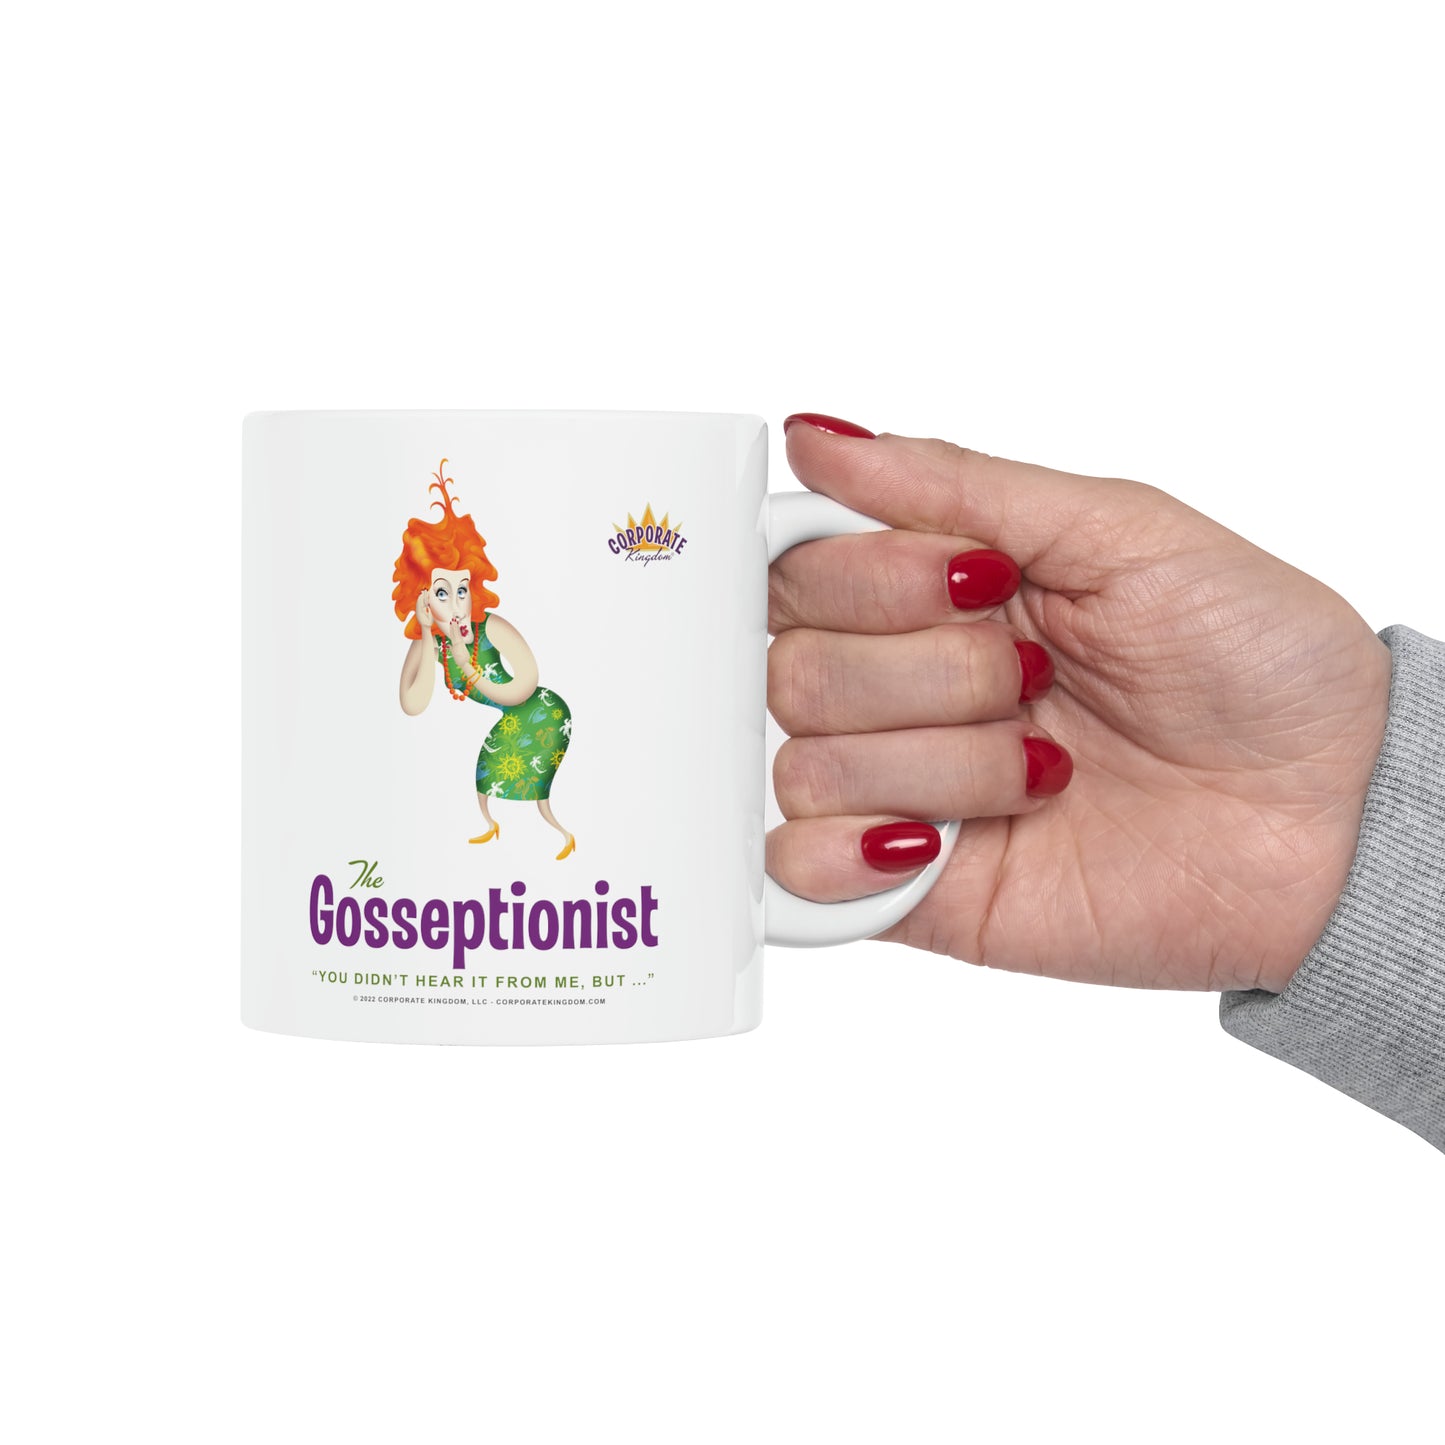 Gosseptionist Coffee Mug by Corporate Kingdom®